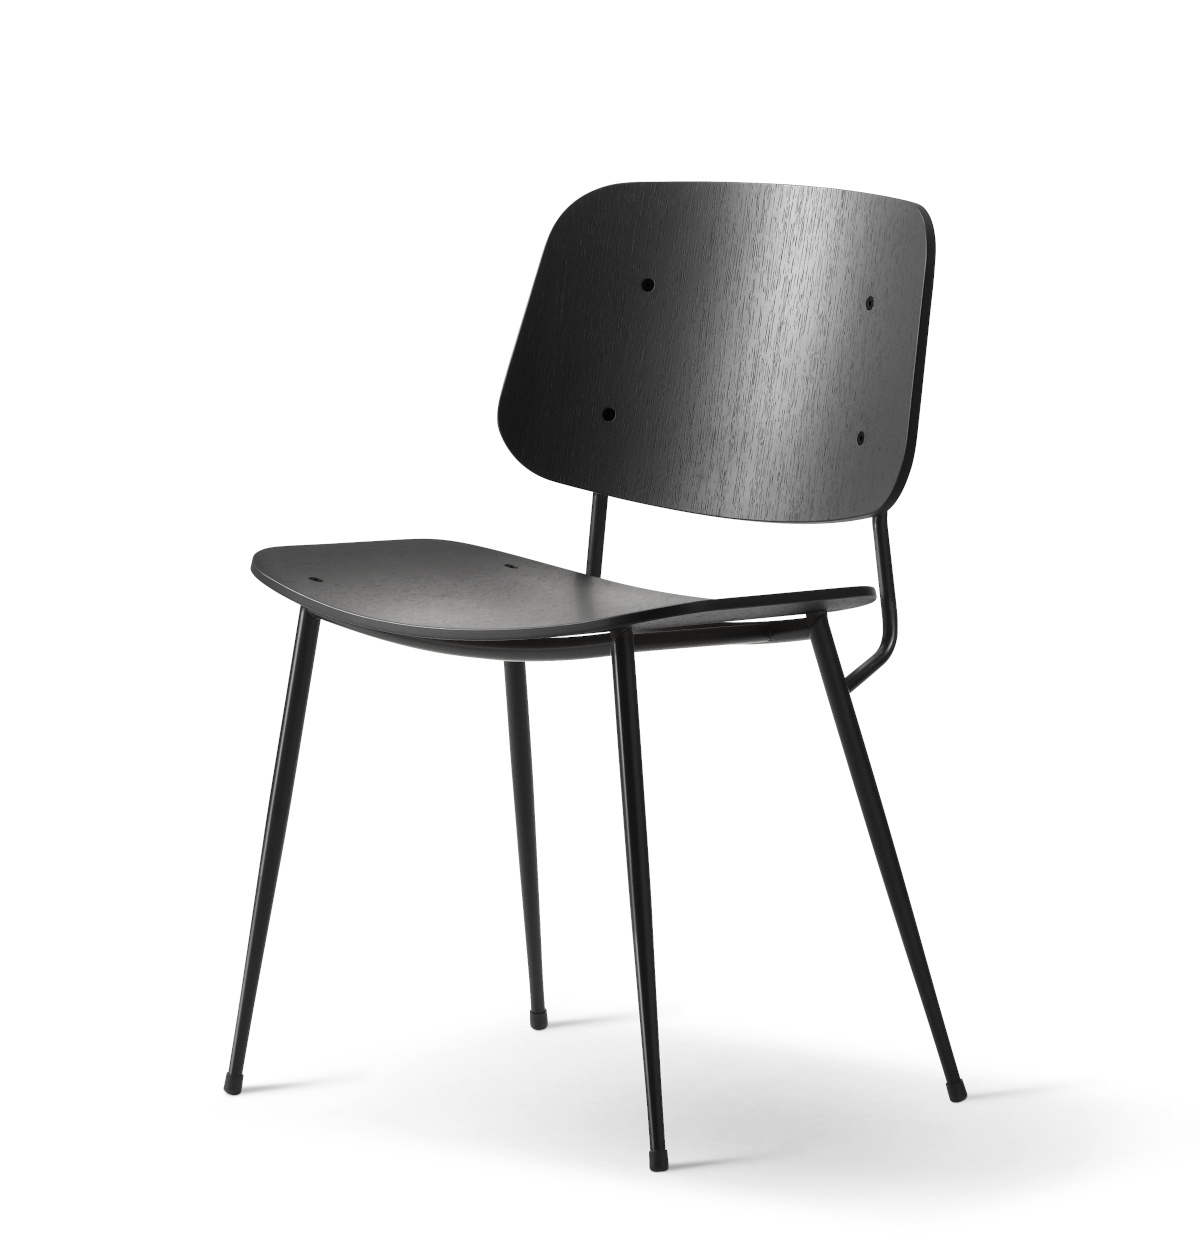 Søborg Metal Base Stuhl, chrom / eiche schwarz lackiert